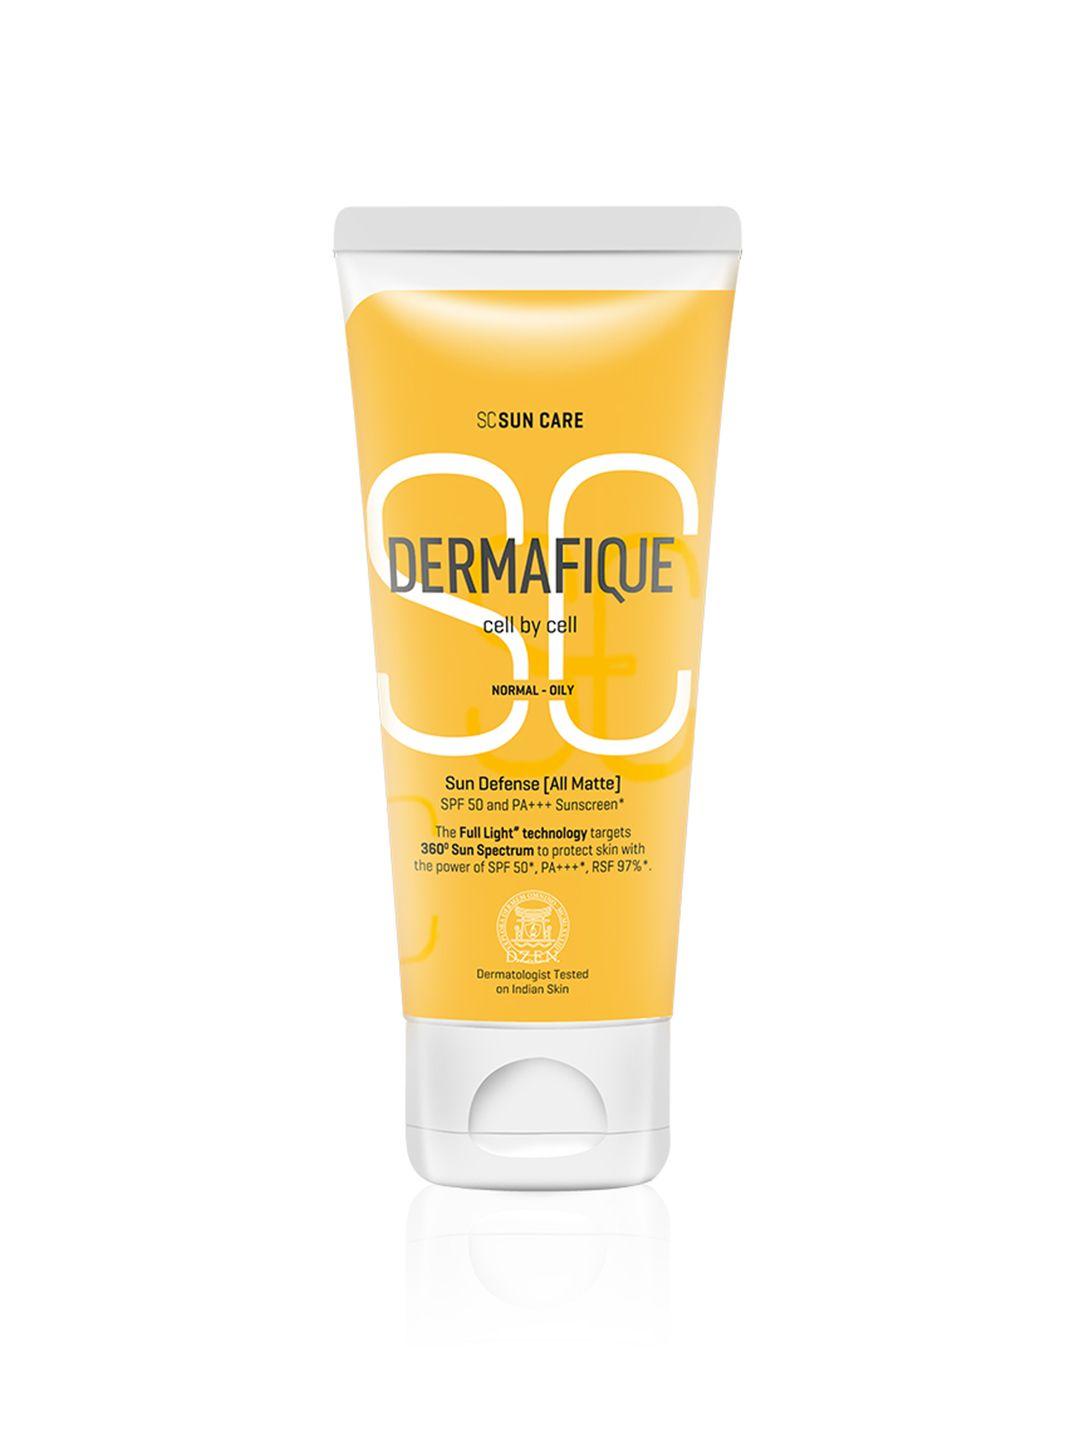 dermafique sun defense all matte sunscreen spf50 for normal to oily skin - 50g